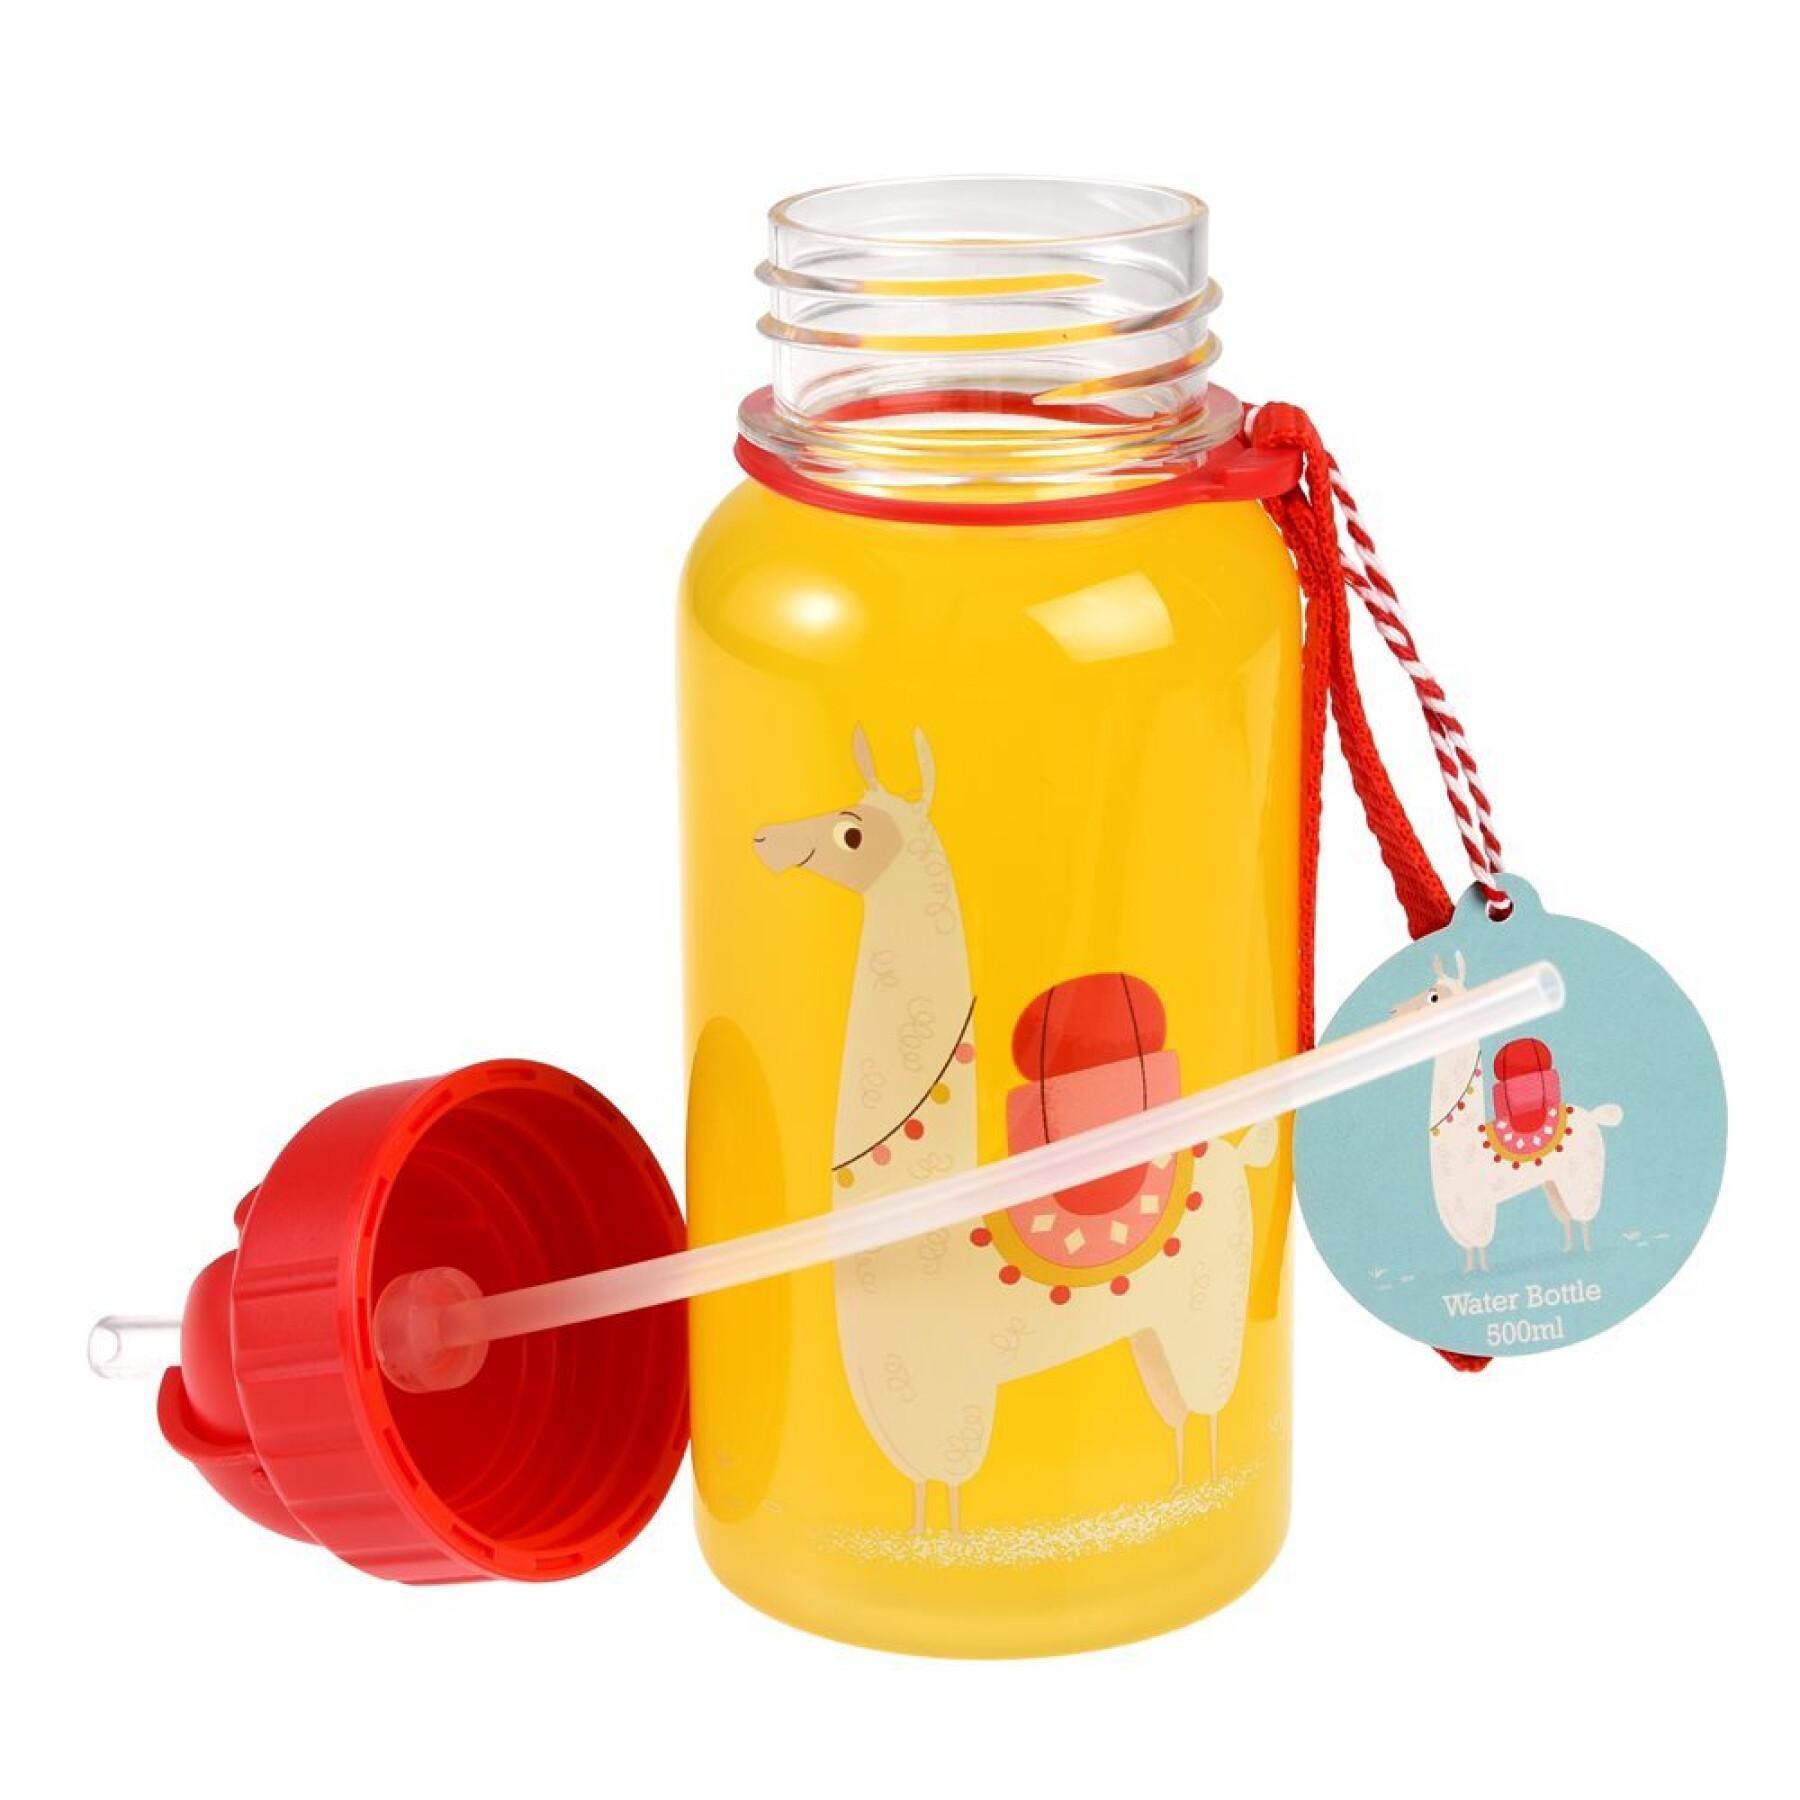 Reusable bottle for children Rex London Dolly Llama